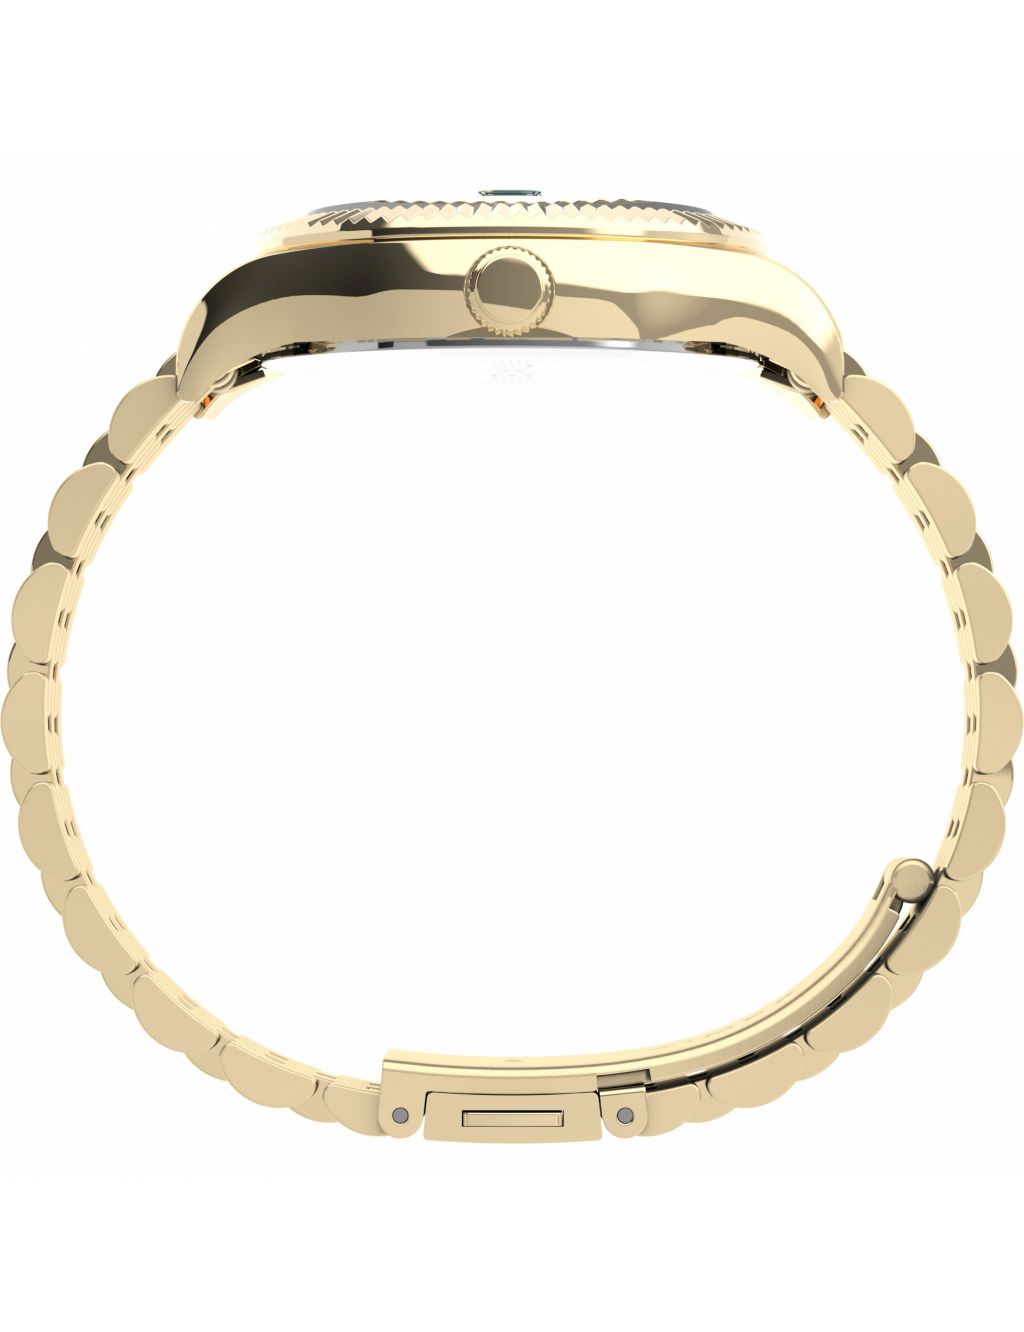 Timex Waterbury Gold Watch image 2